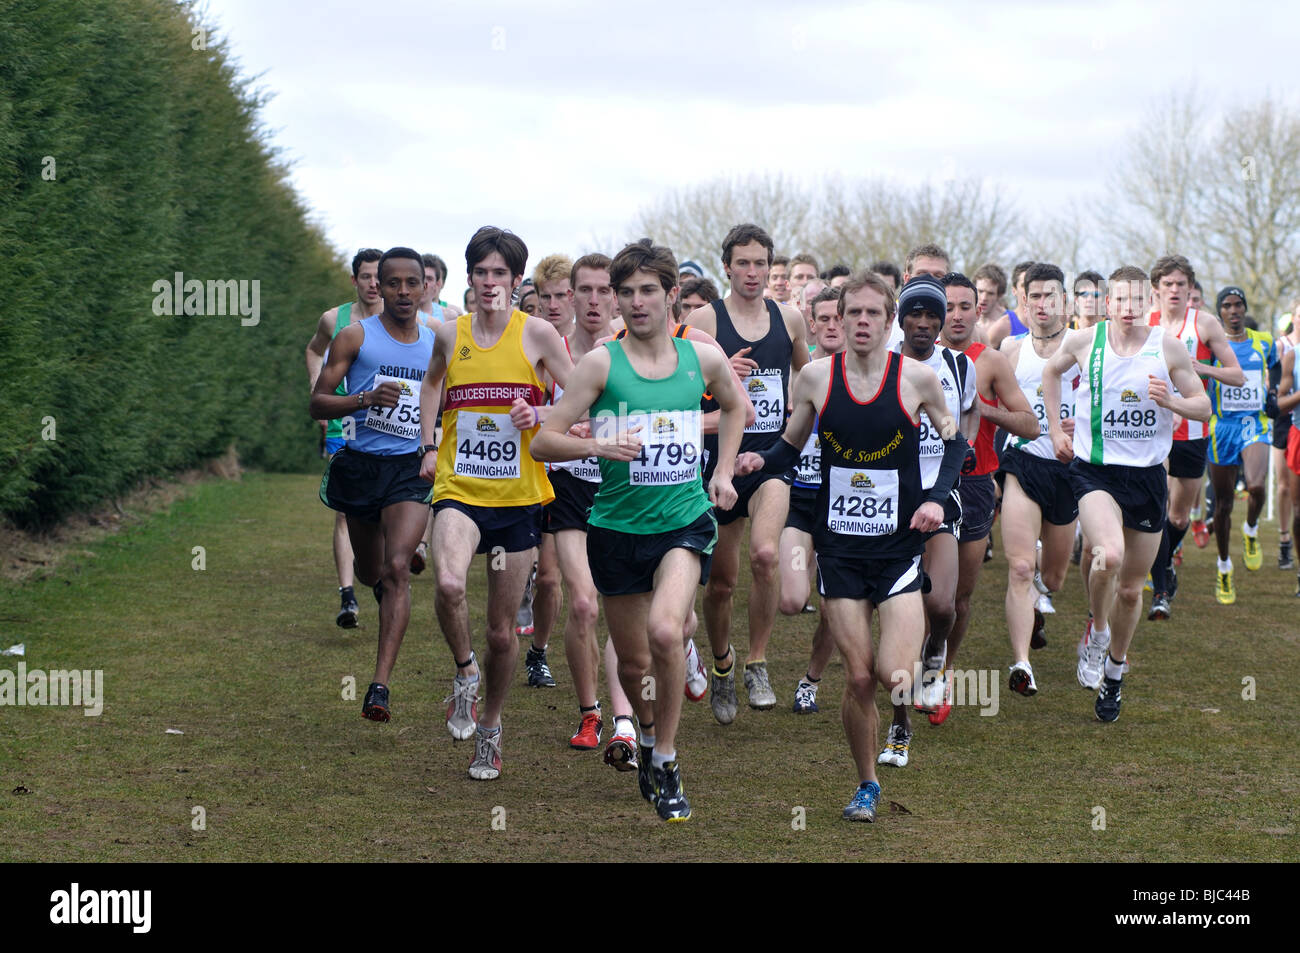 Men`s cross-country running race, Cofton Park, Birmingham, UK Stock Photo